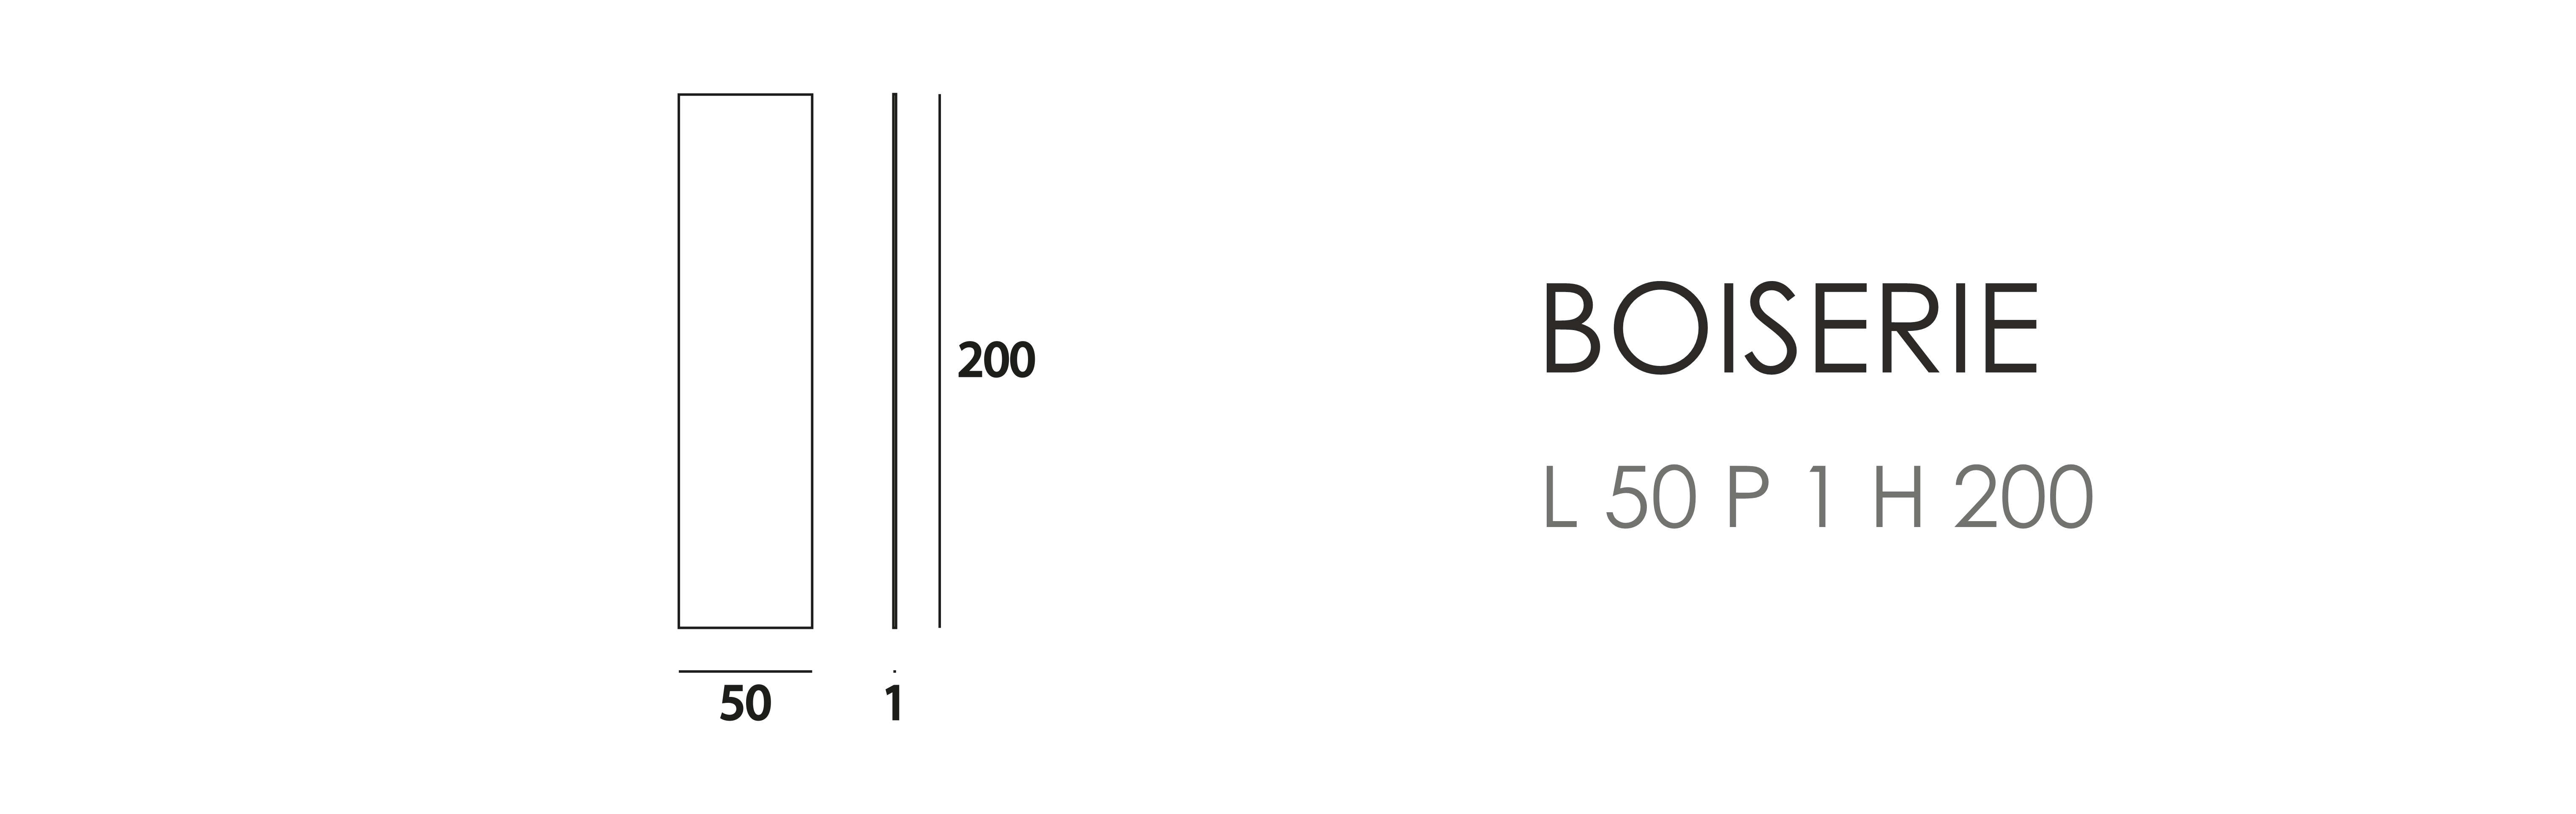 Boiserie L 50 P 1 H 200